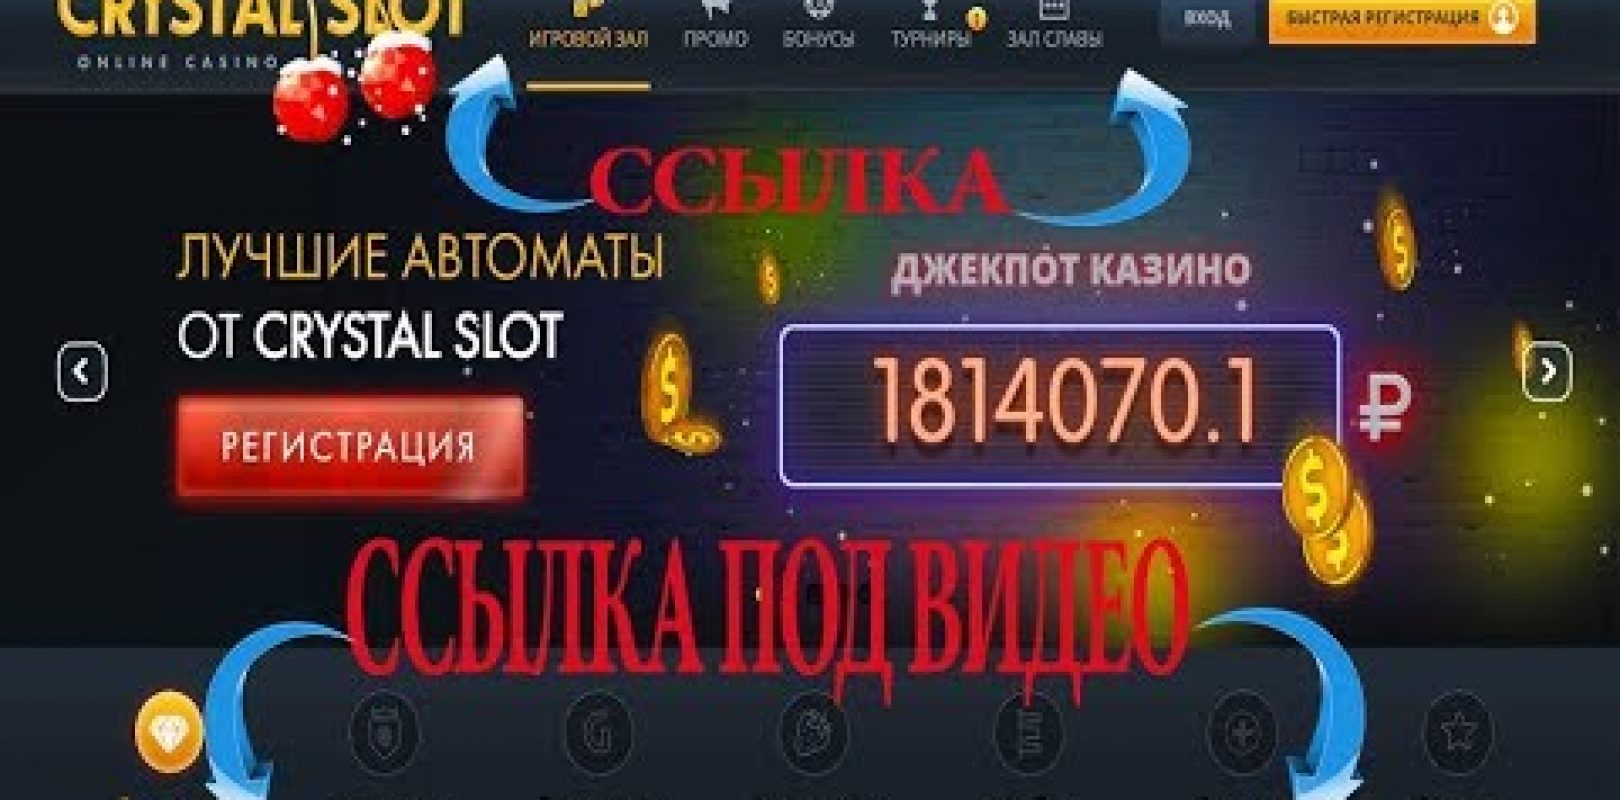 Latest highway casino bonus codes